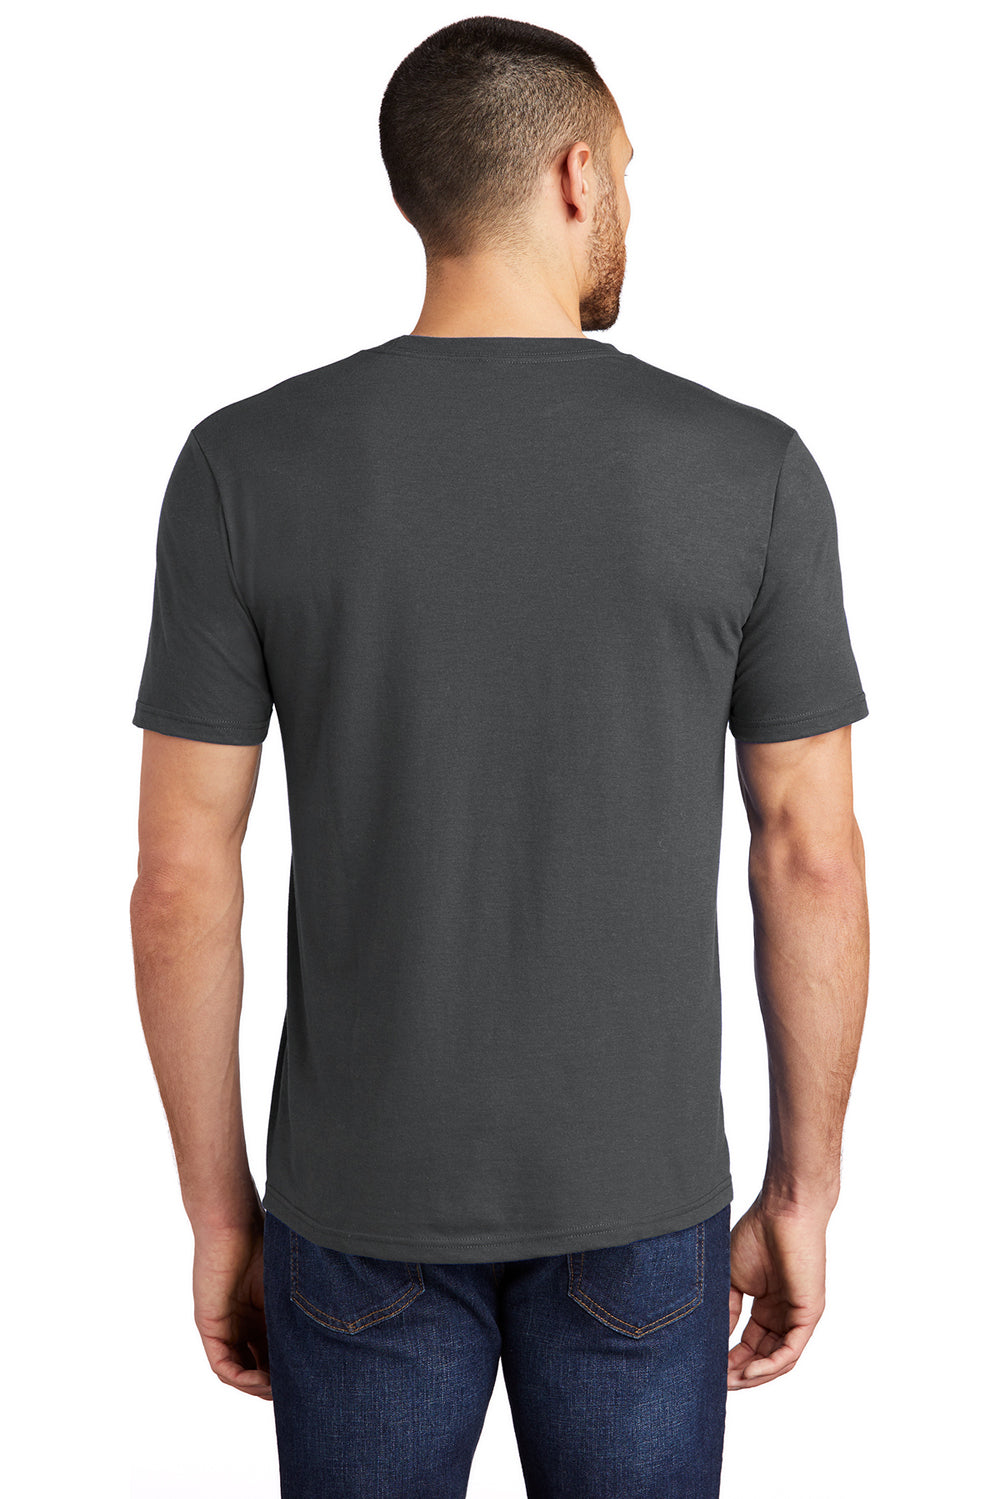 District DM130 Mens Perfect Tri Short Sleeve Crewneck T-Shirt Charcoal Grey Back